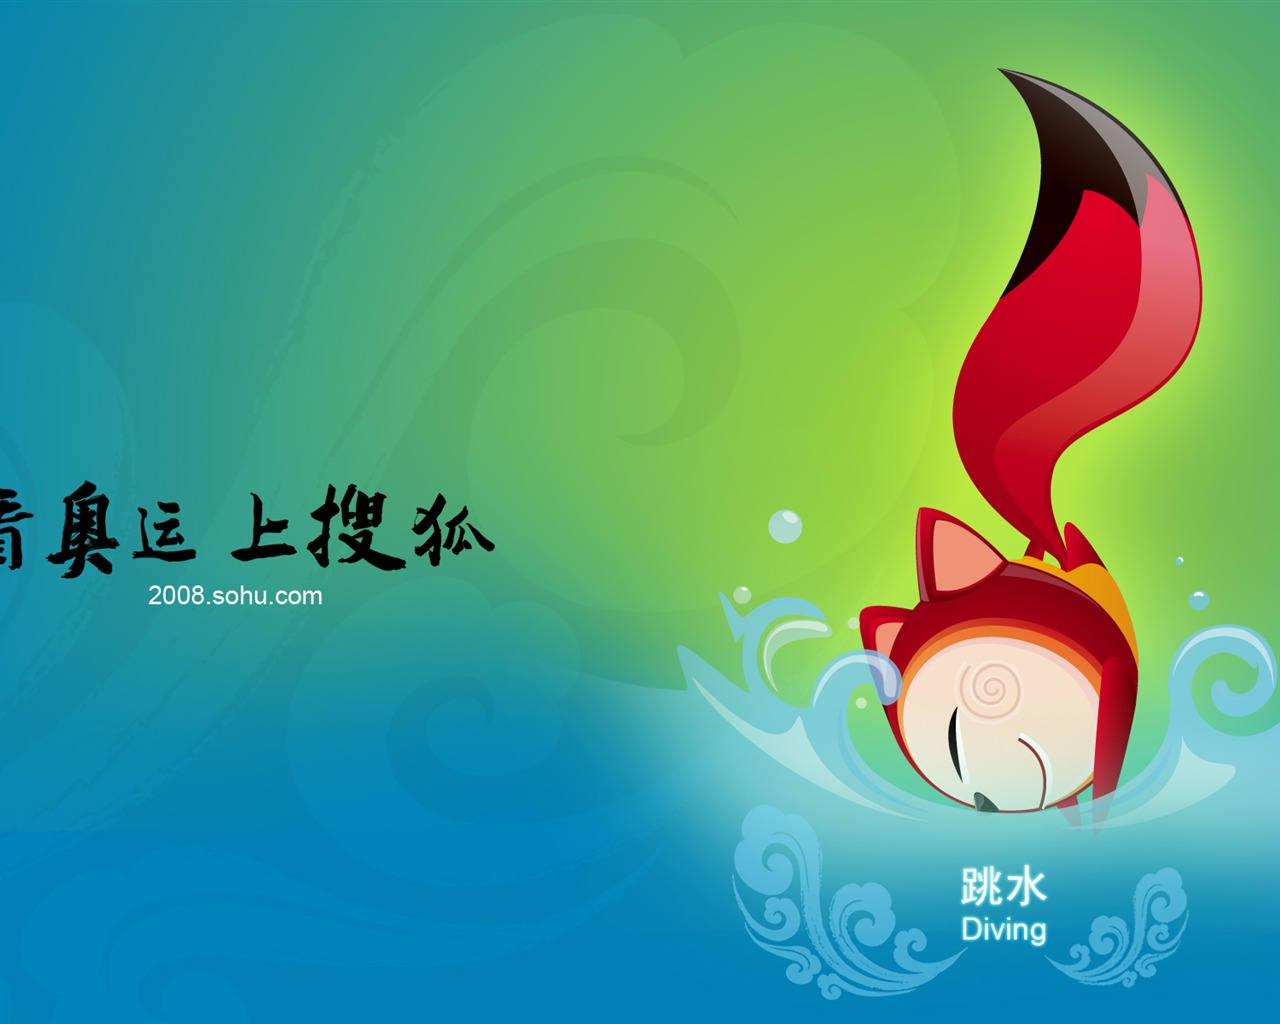 Sohu Olympic sports style wallpaper #20 - 1280x1024